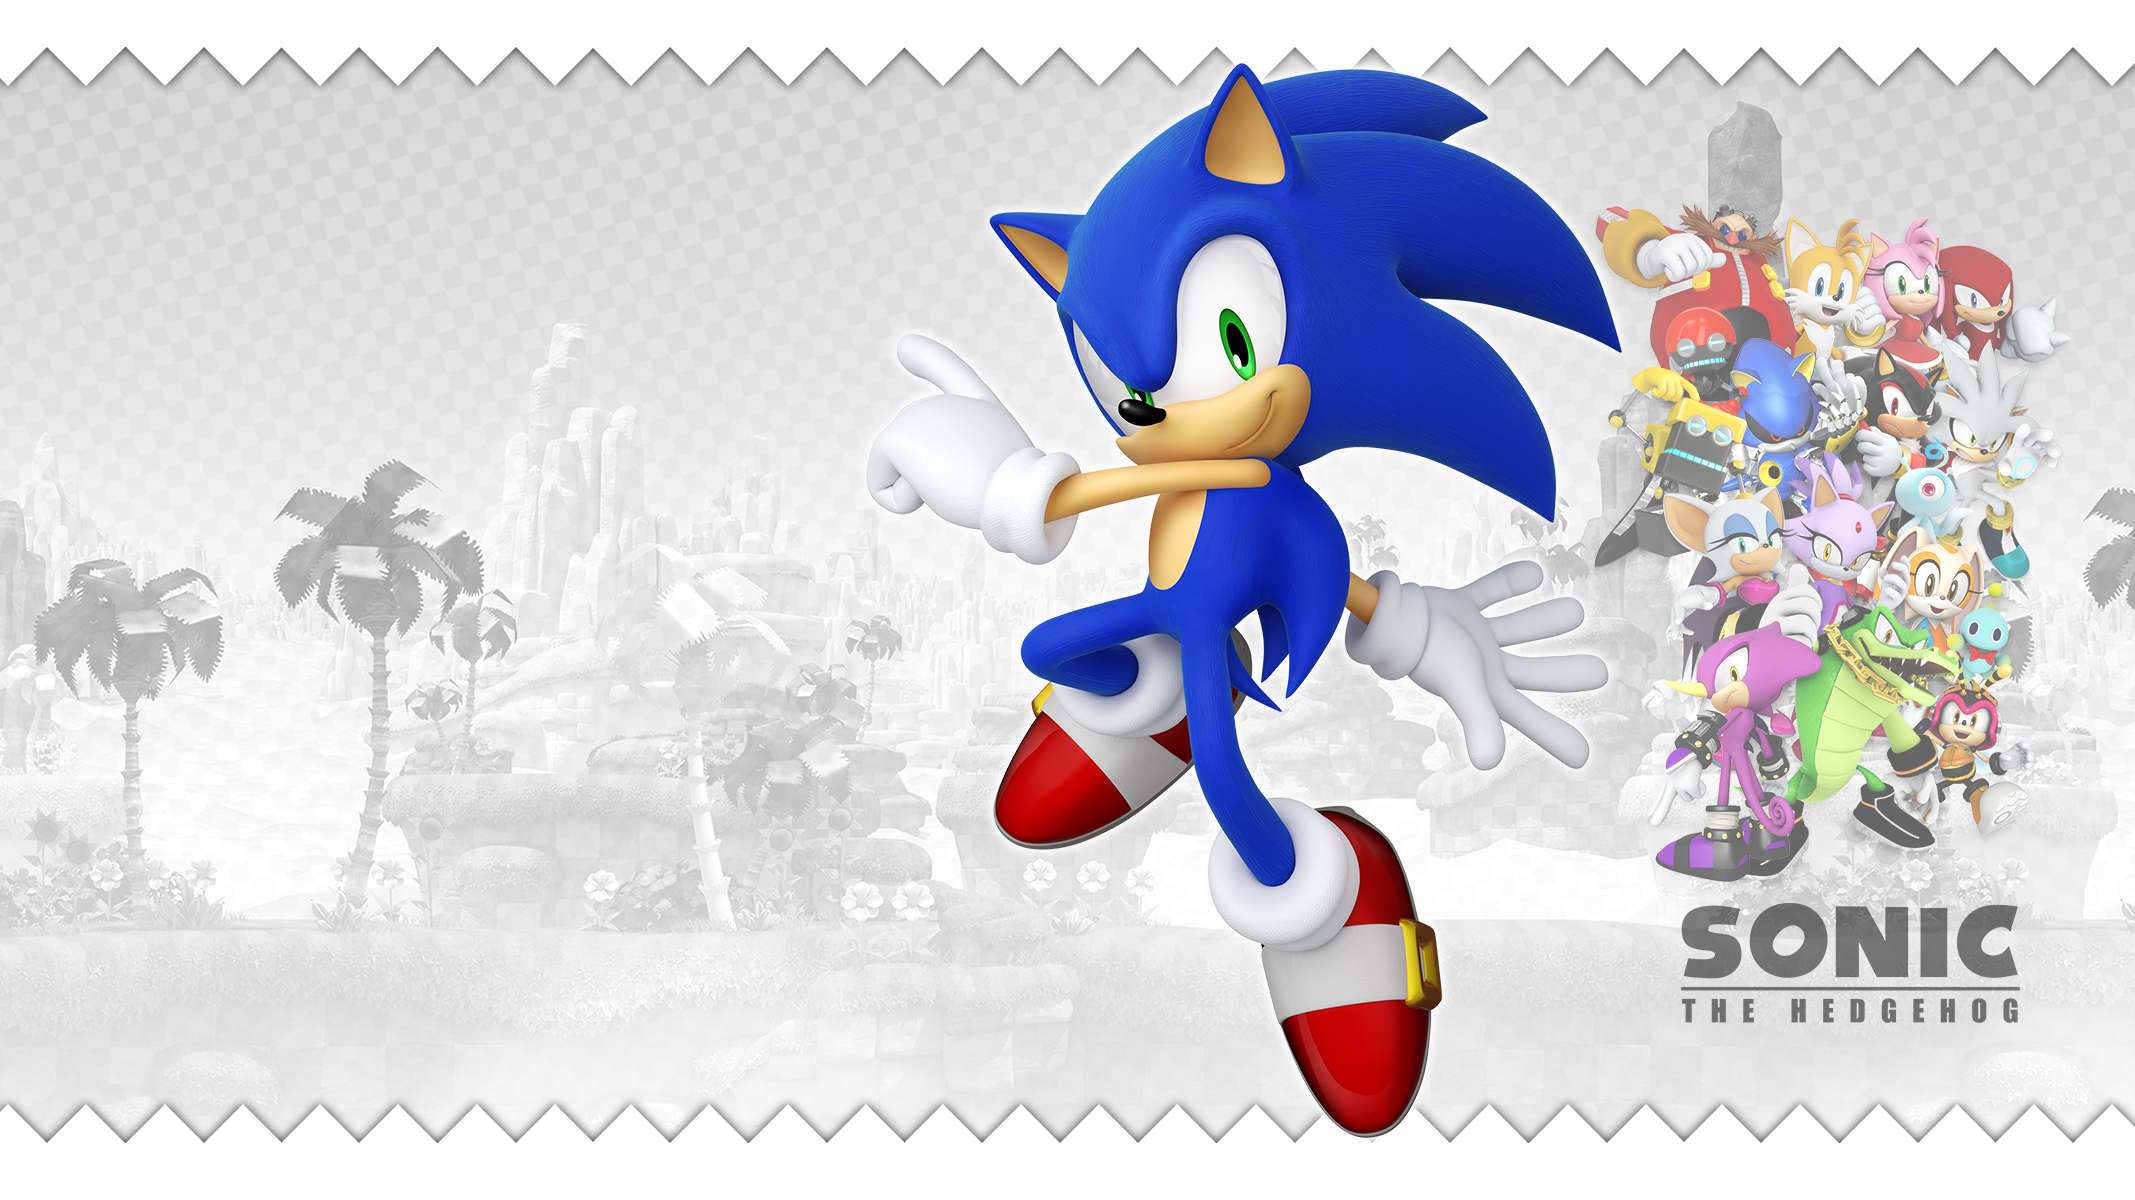 Sonic the Hedgehog Wallpaper by Super Hedgehog